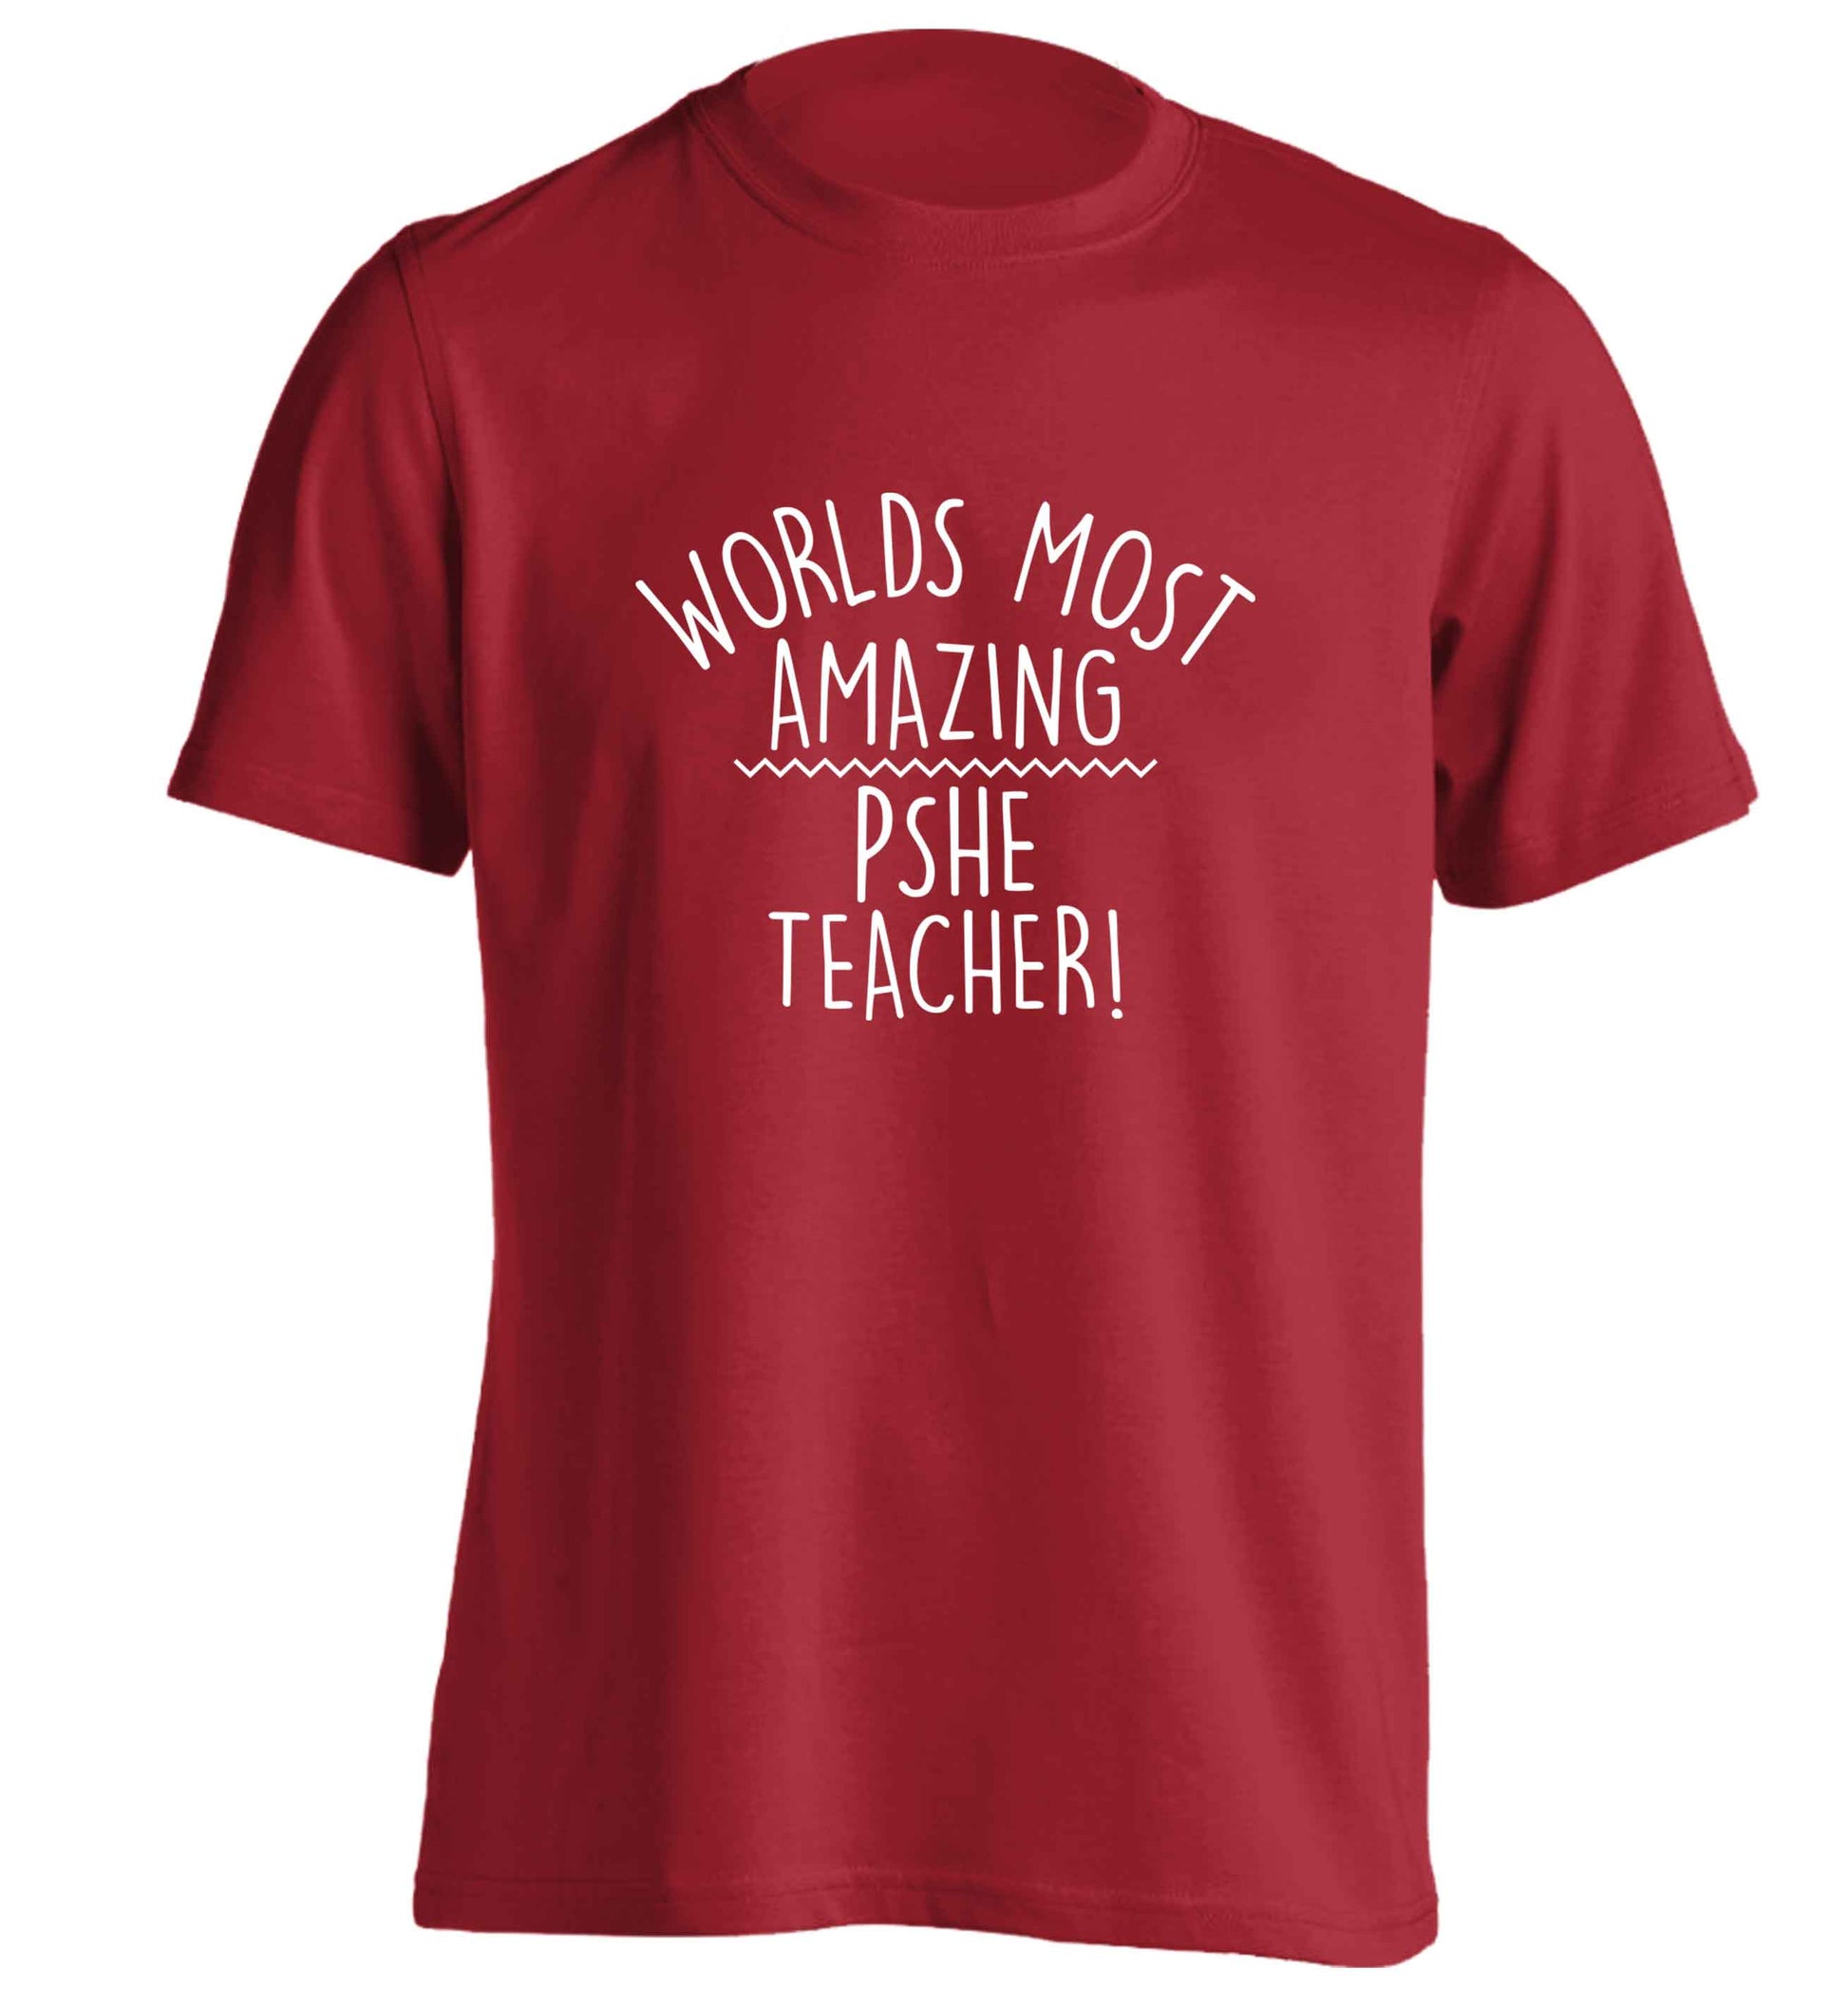 Worlds most amazing PHSE teacher adults unisex red Tshirt 2XL